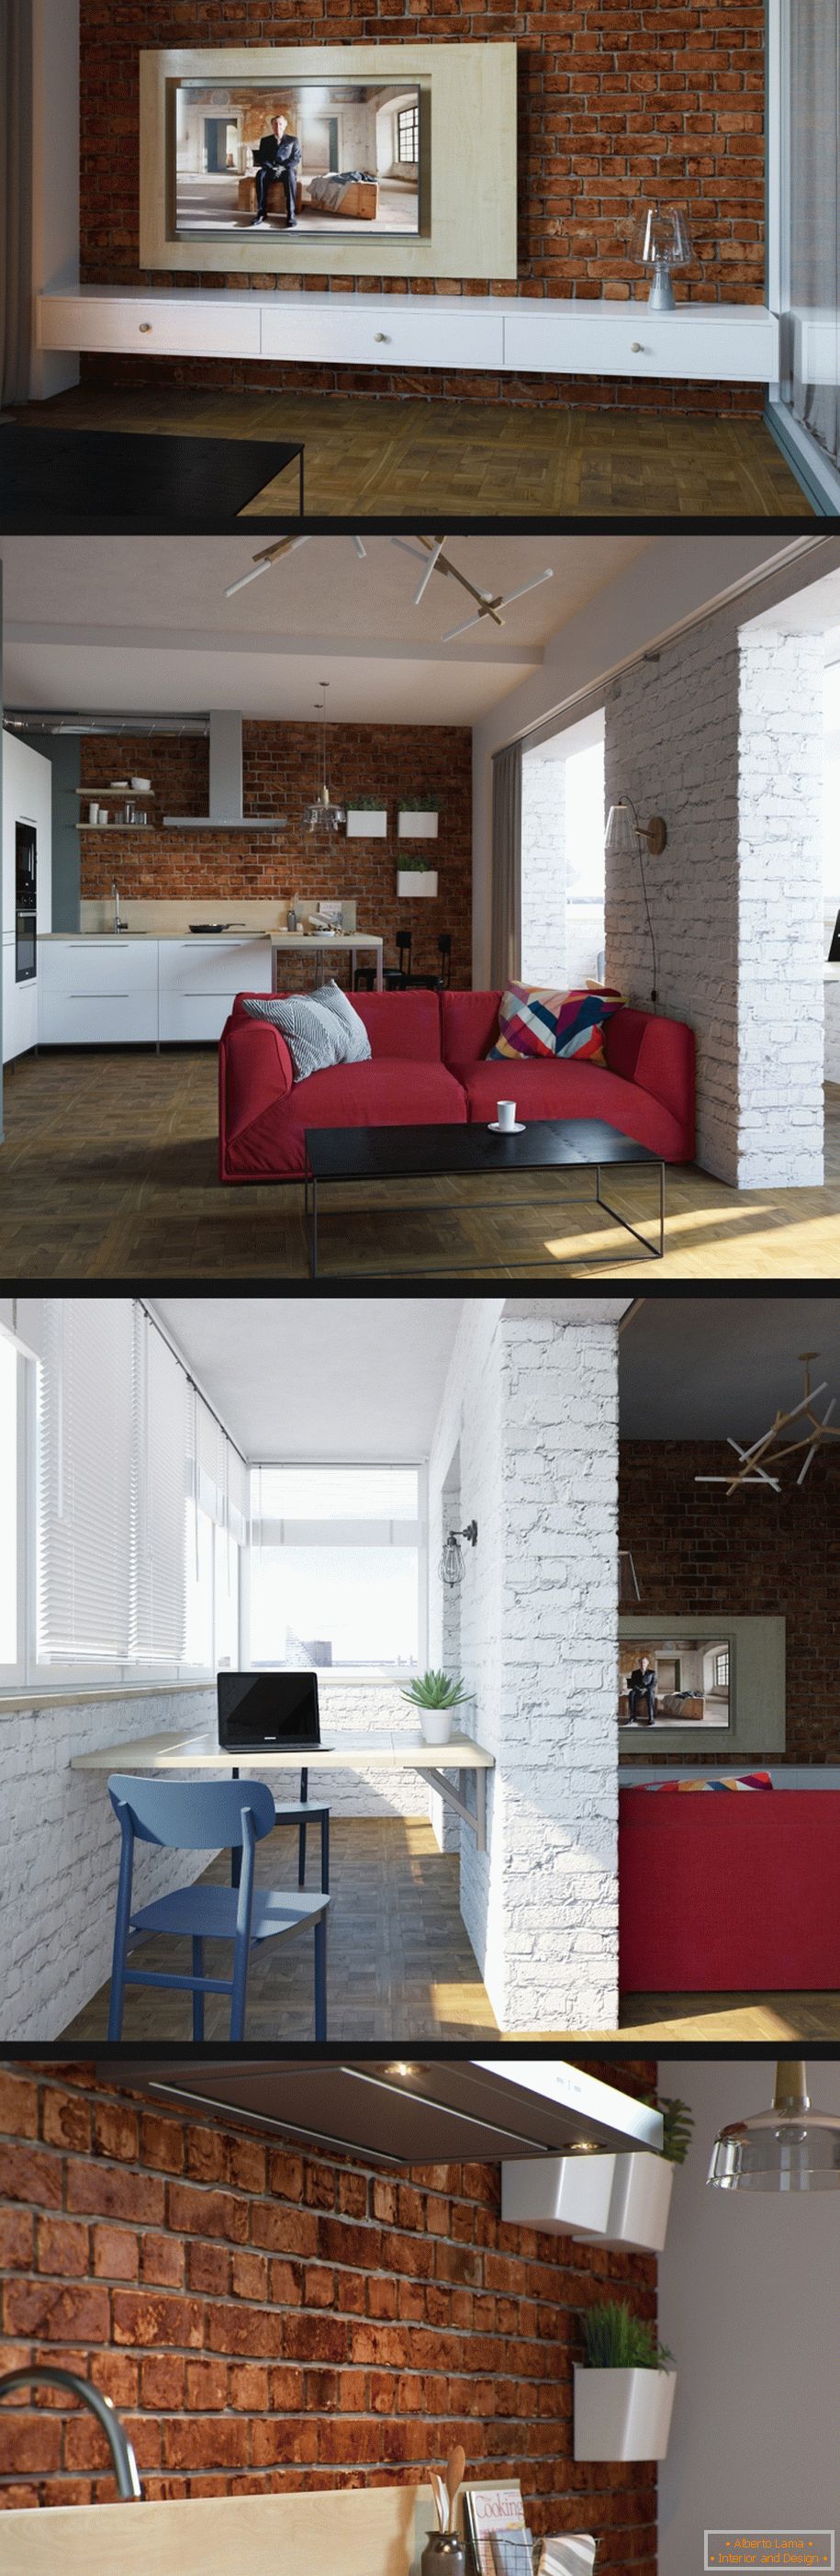 Design de interiores de estilo loft